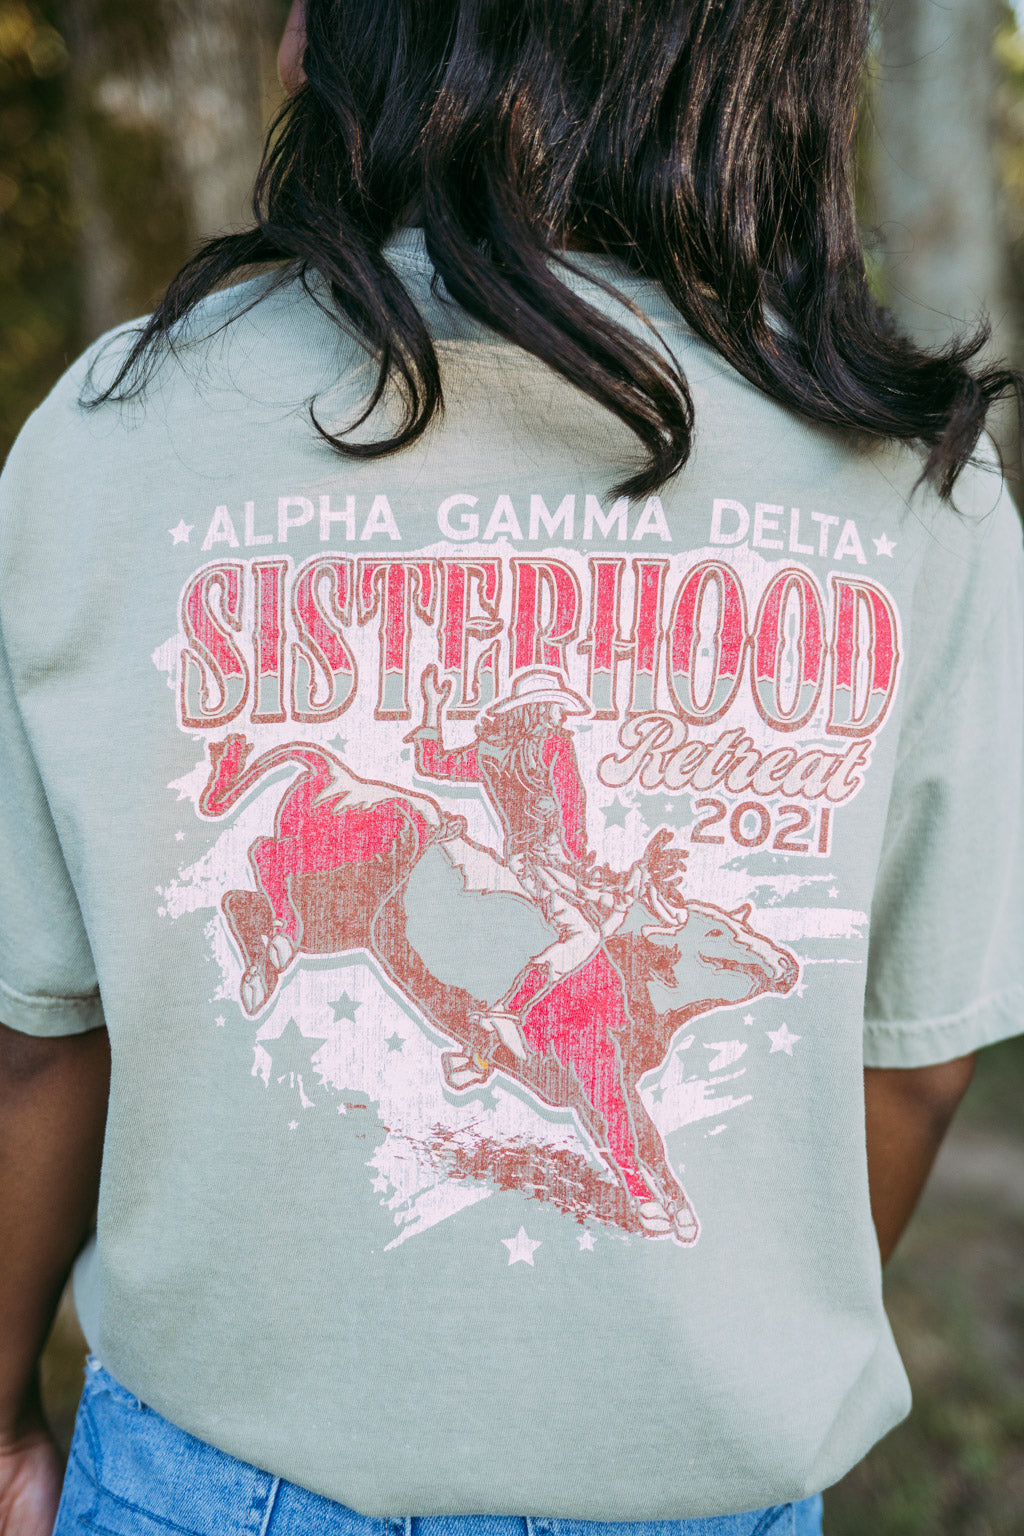 Alpha Gamma Delta Sisterhood Retreat Tshirt